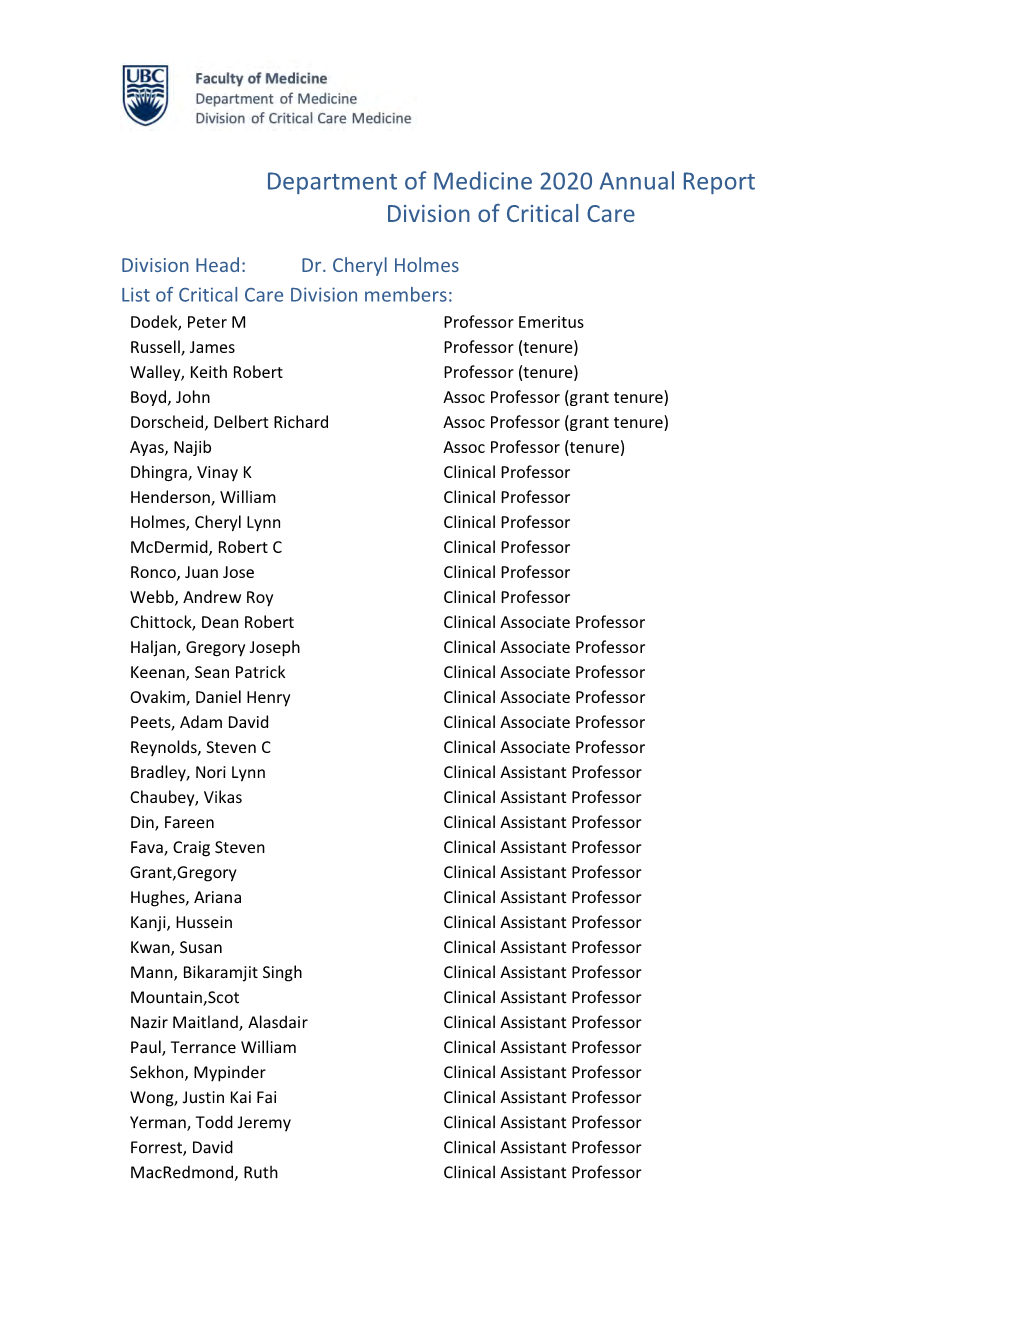 Department of Medicine 2020 Annual Report Division of Critical Care